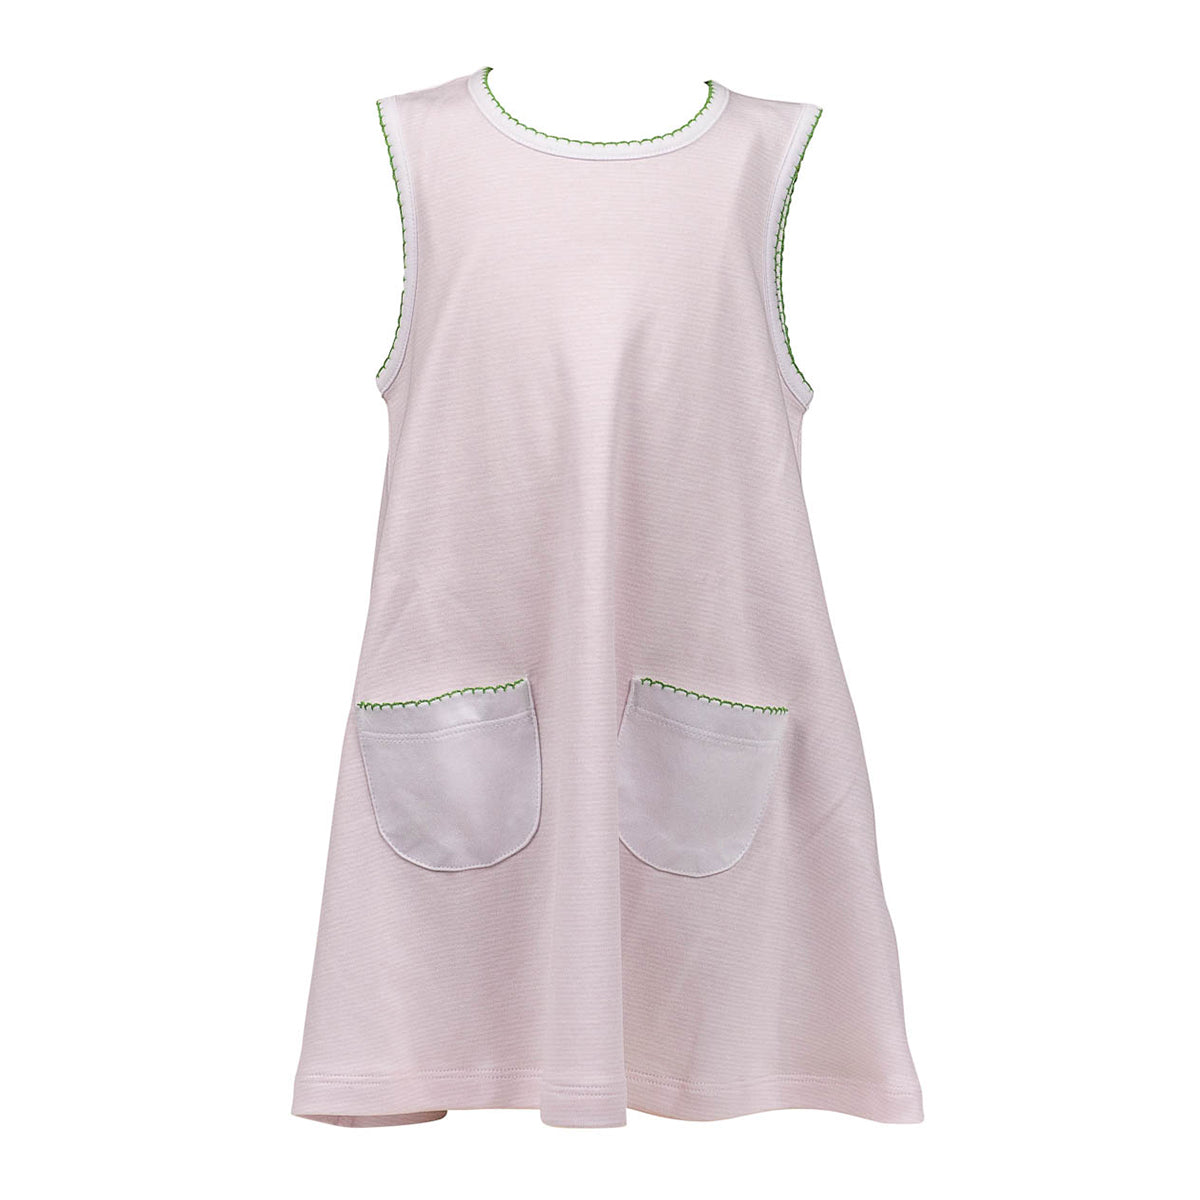 Toddler Girl's Light Pink Stripe Pima Cotton Dress by The Proper Peony